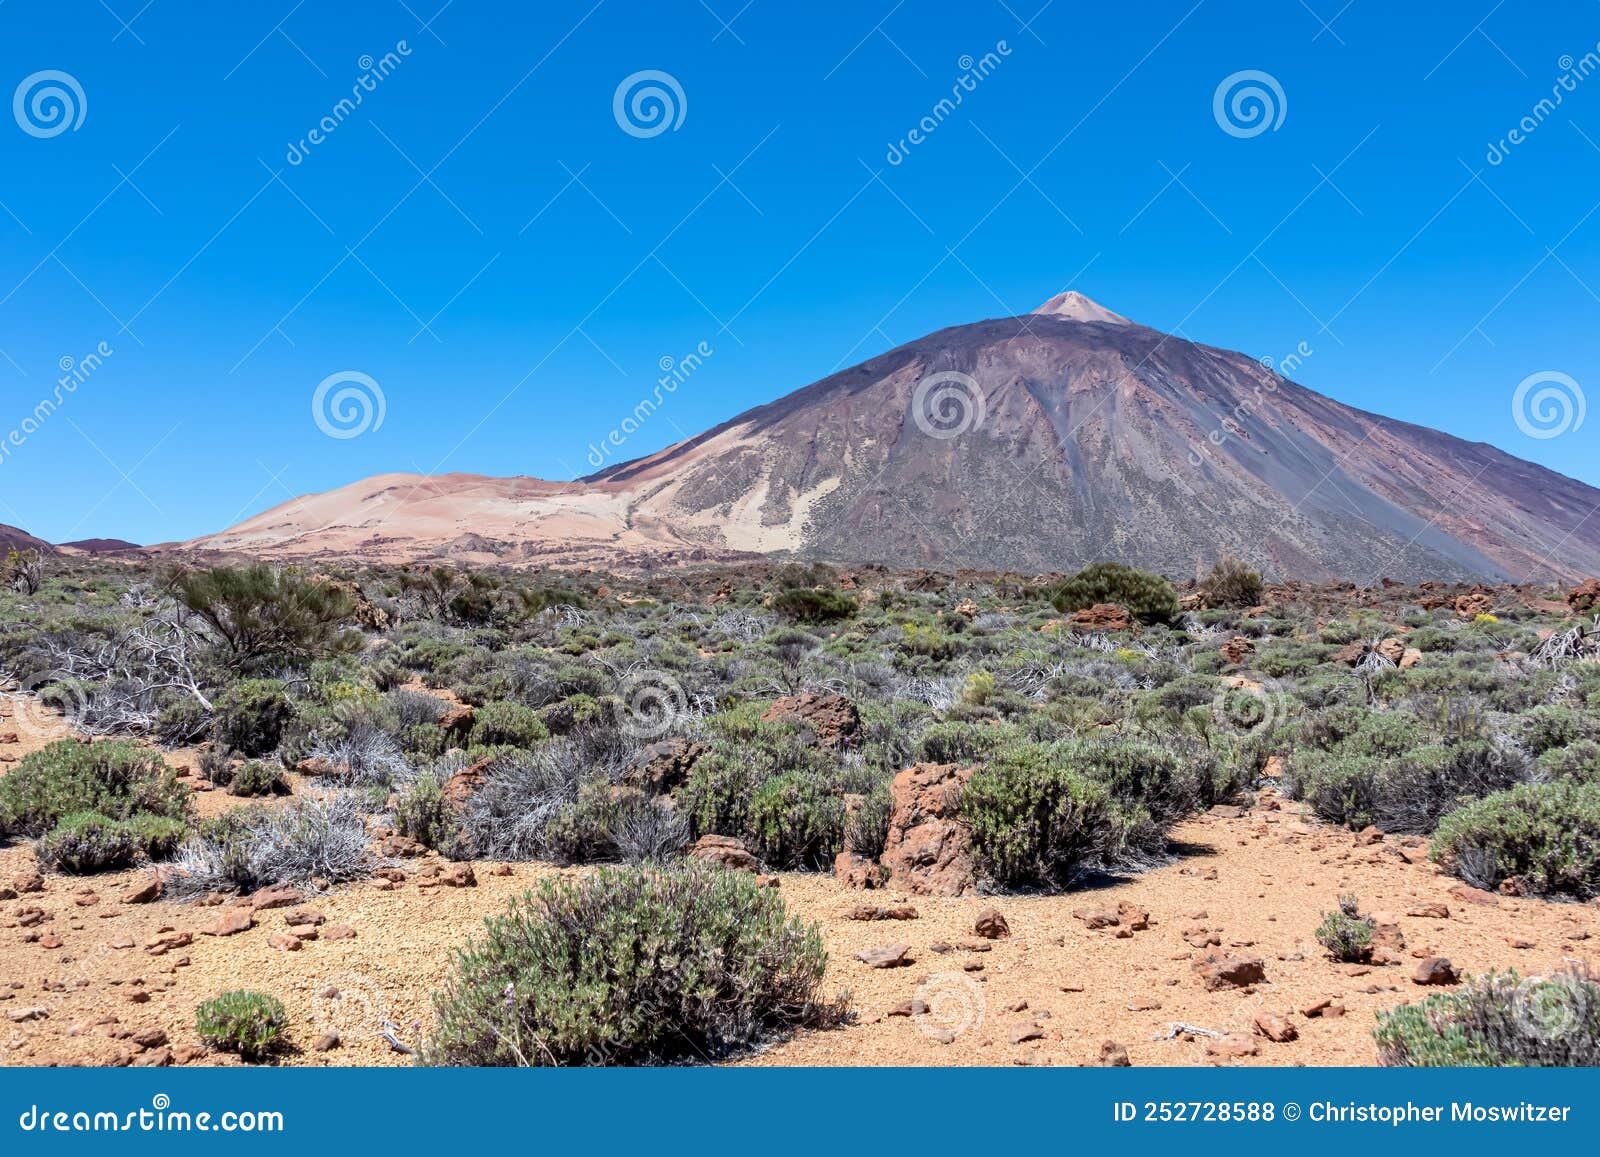 teide - panoramic view on volcano pico del teide and montana blanca, mount el teide national park, tenerife, canary islands,